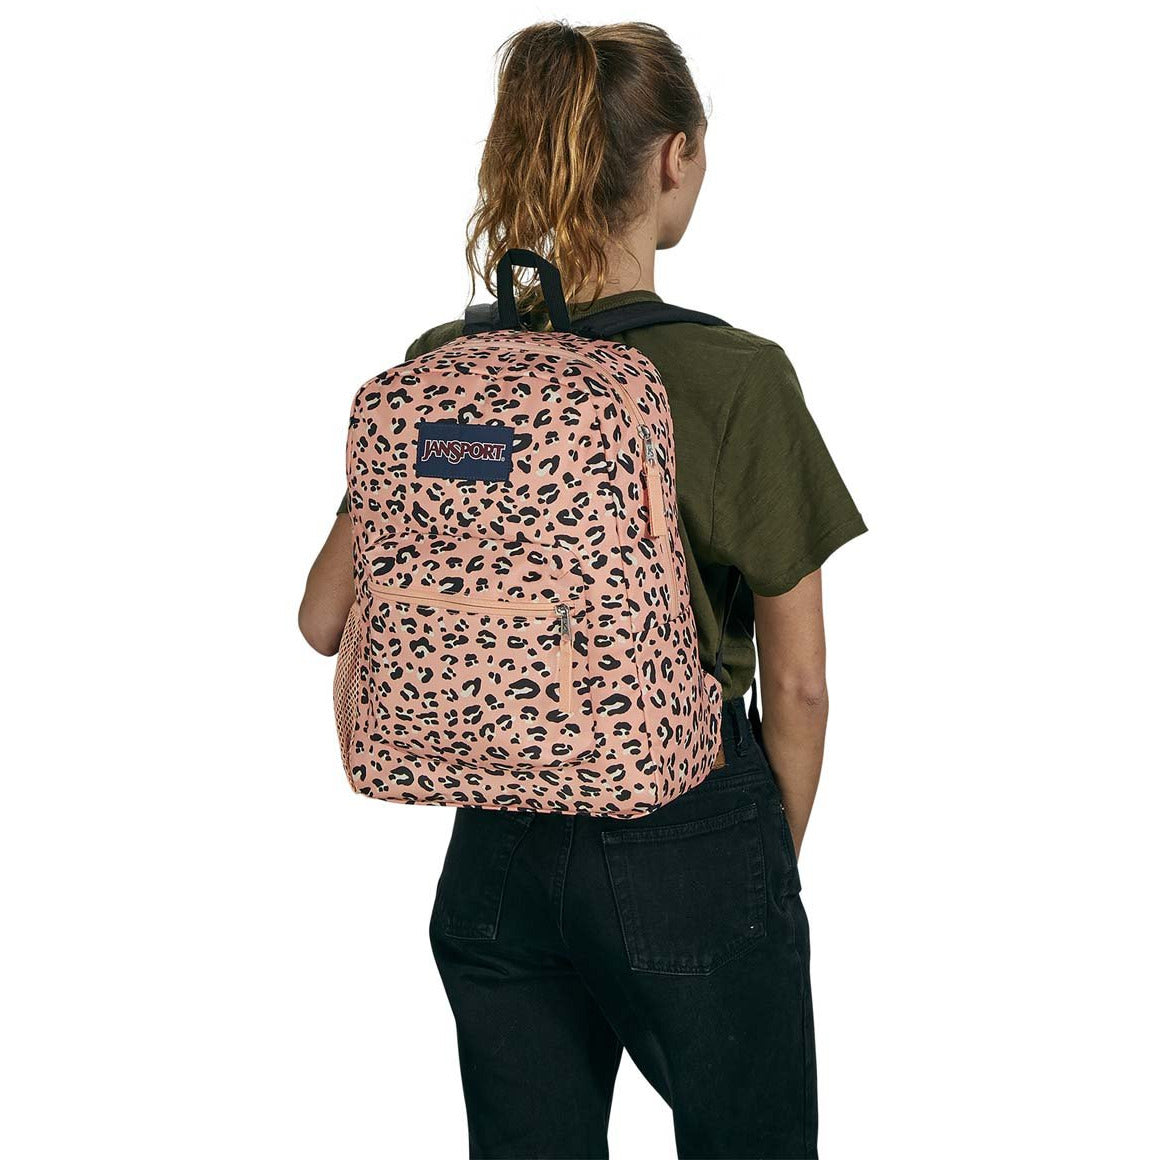 Jansport Unisex Superbreak Show Your Spots Leopard Backpack 